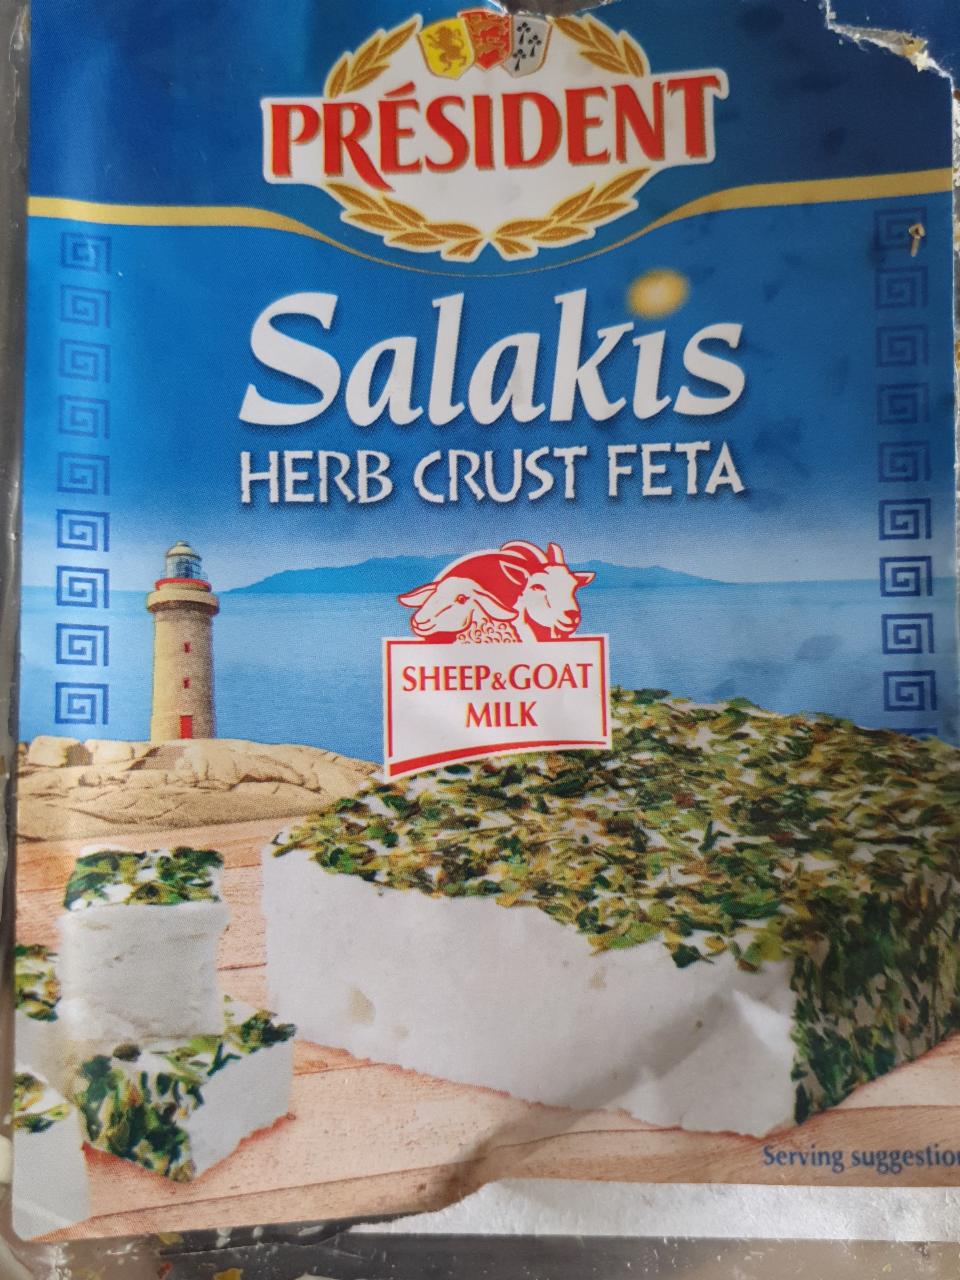 Fotografie - Salakis herb crust feta sheep & goat milk Président